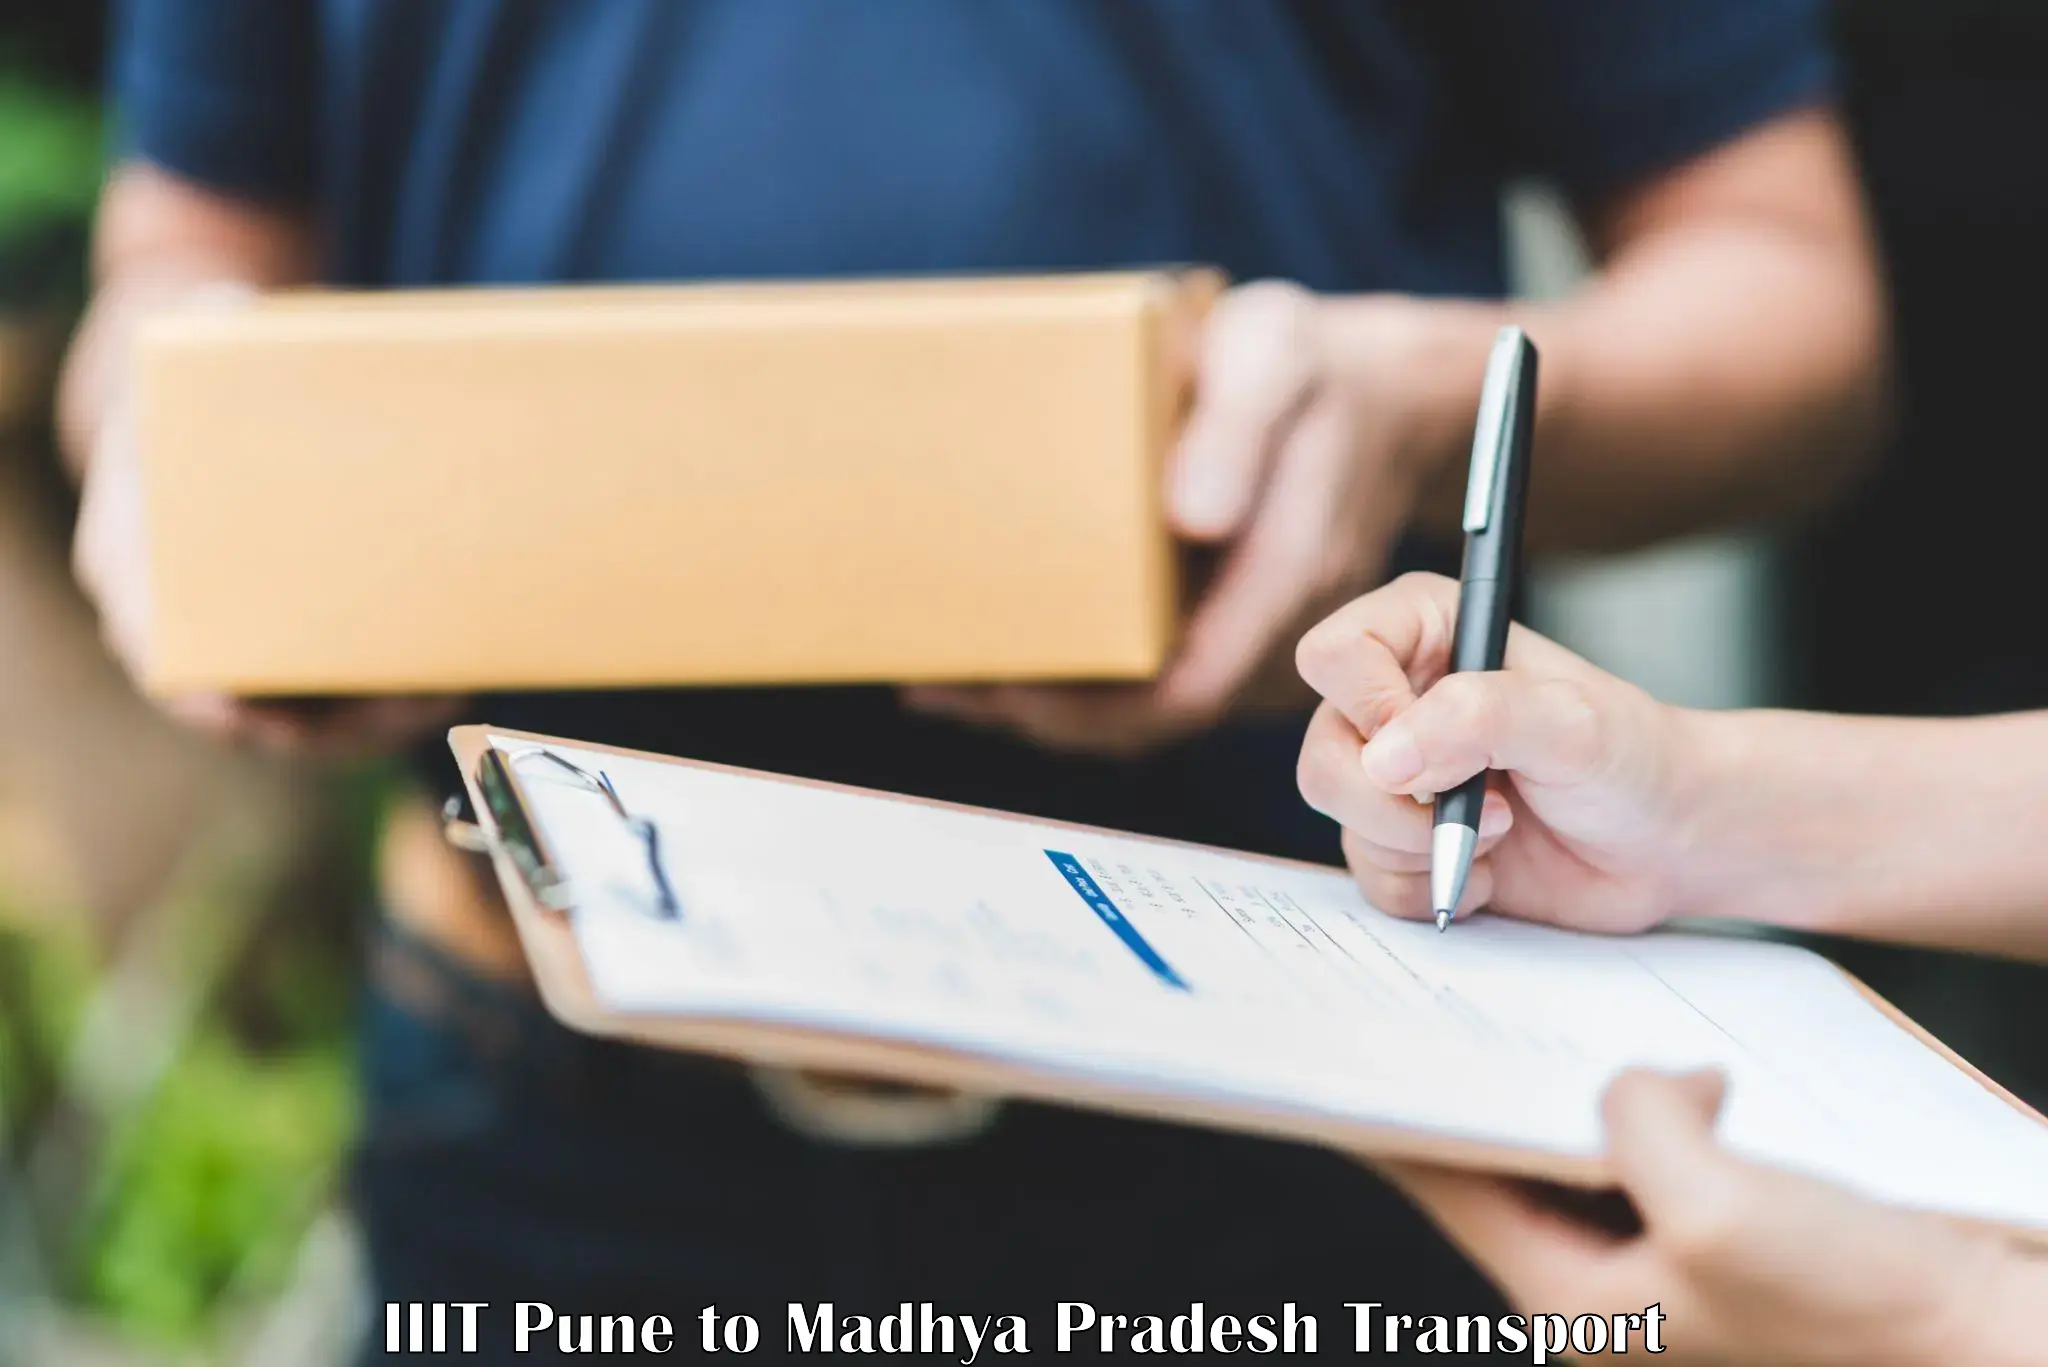 Online transport service IIIT Pune to Rahatgarh